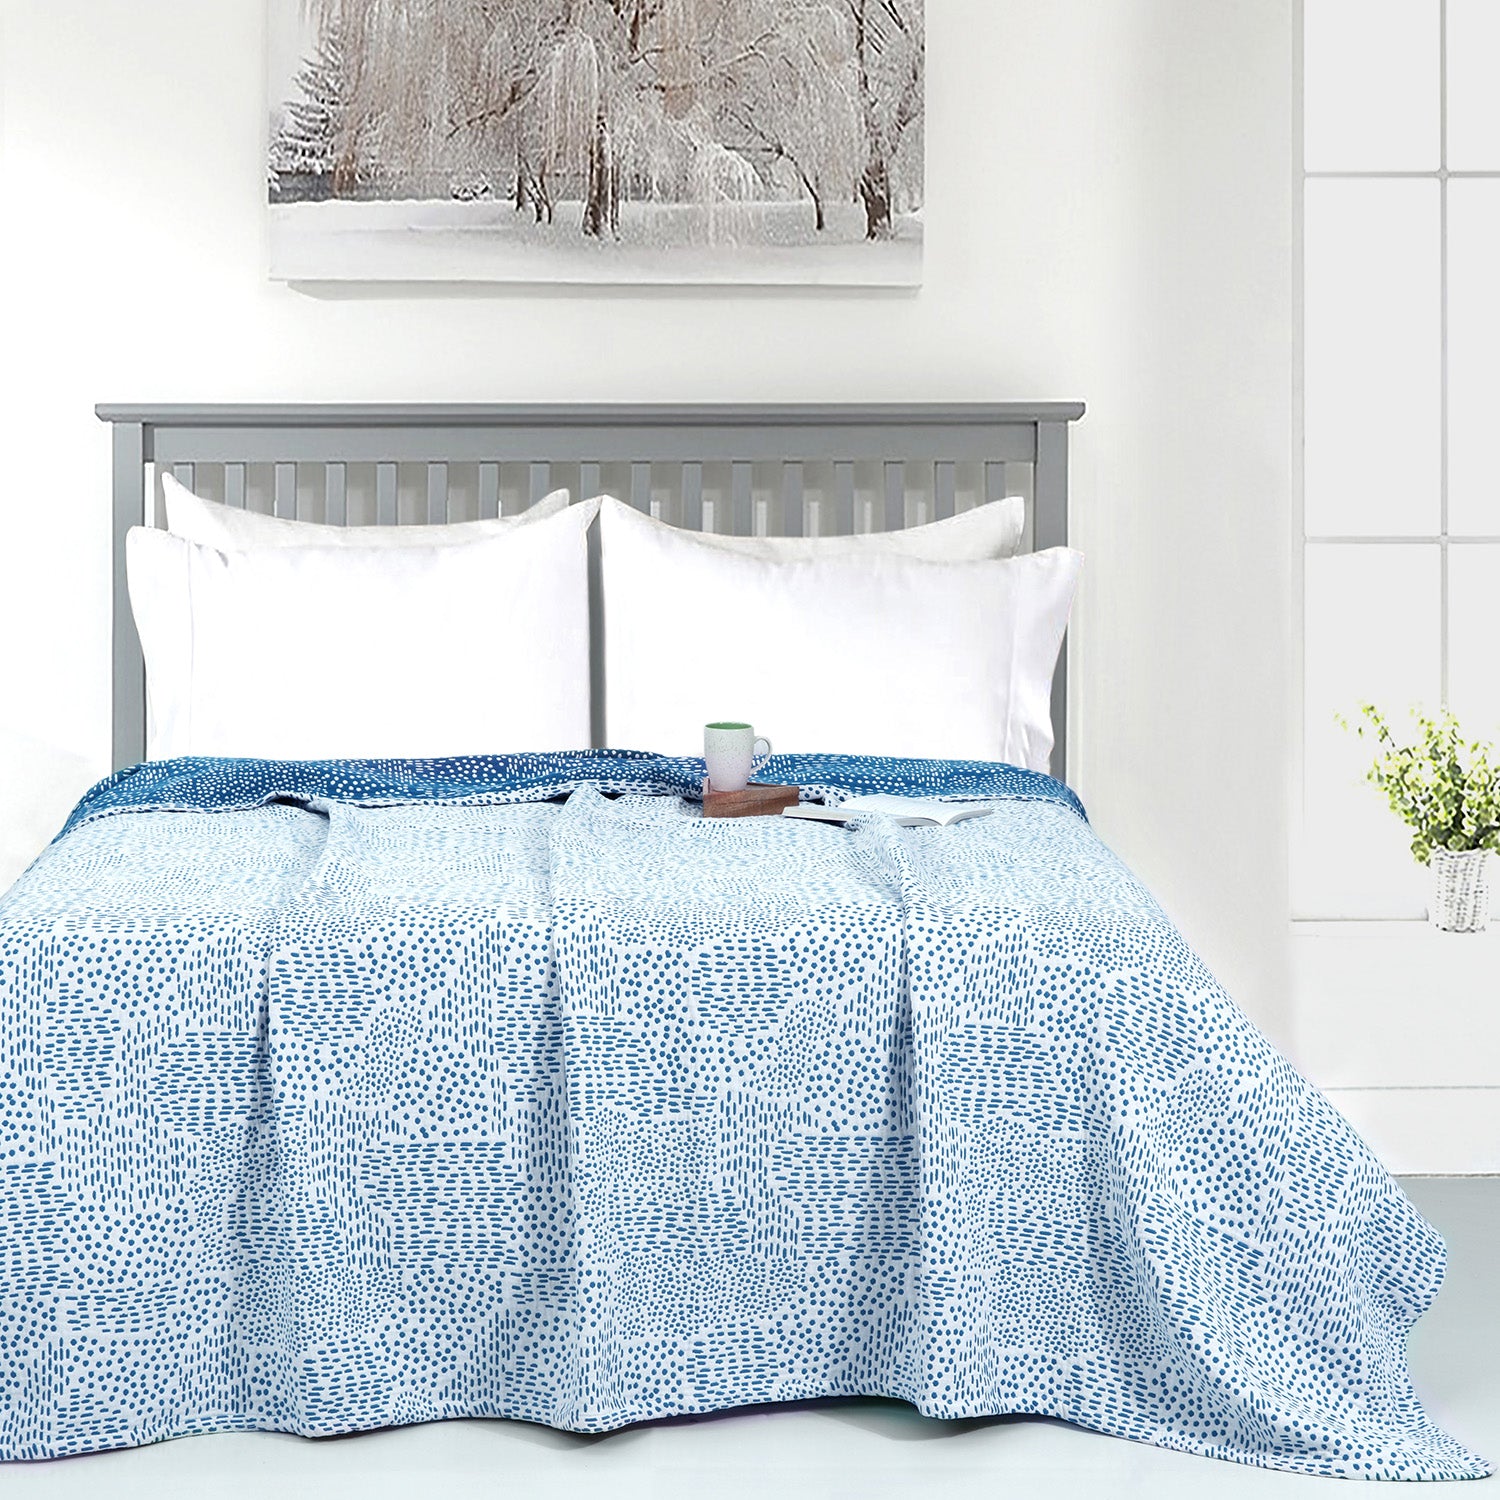 Matelassé blaze & floral design cotton thermal blanket - TreeWool blanket